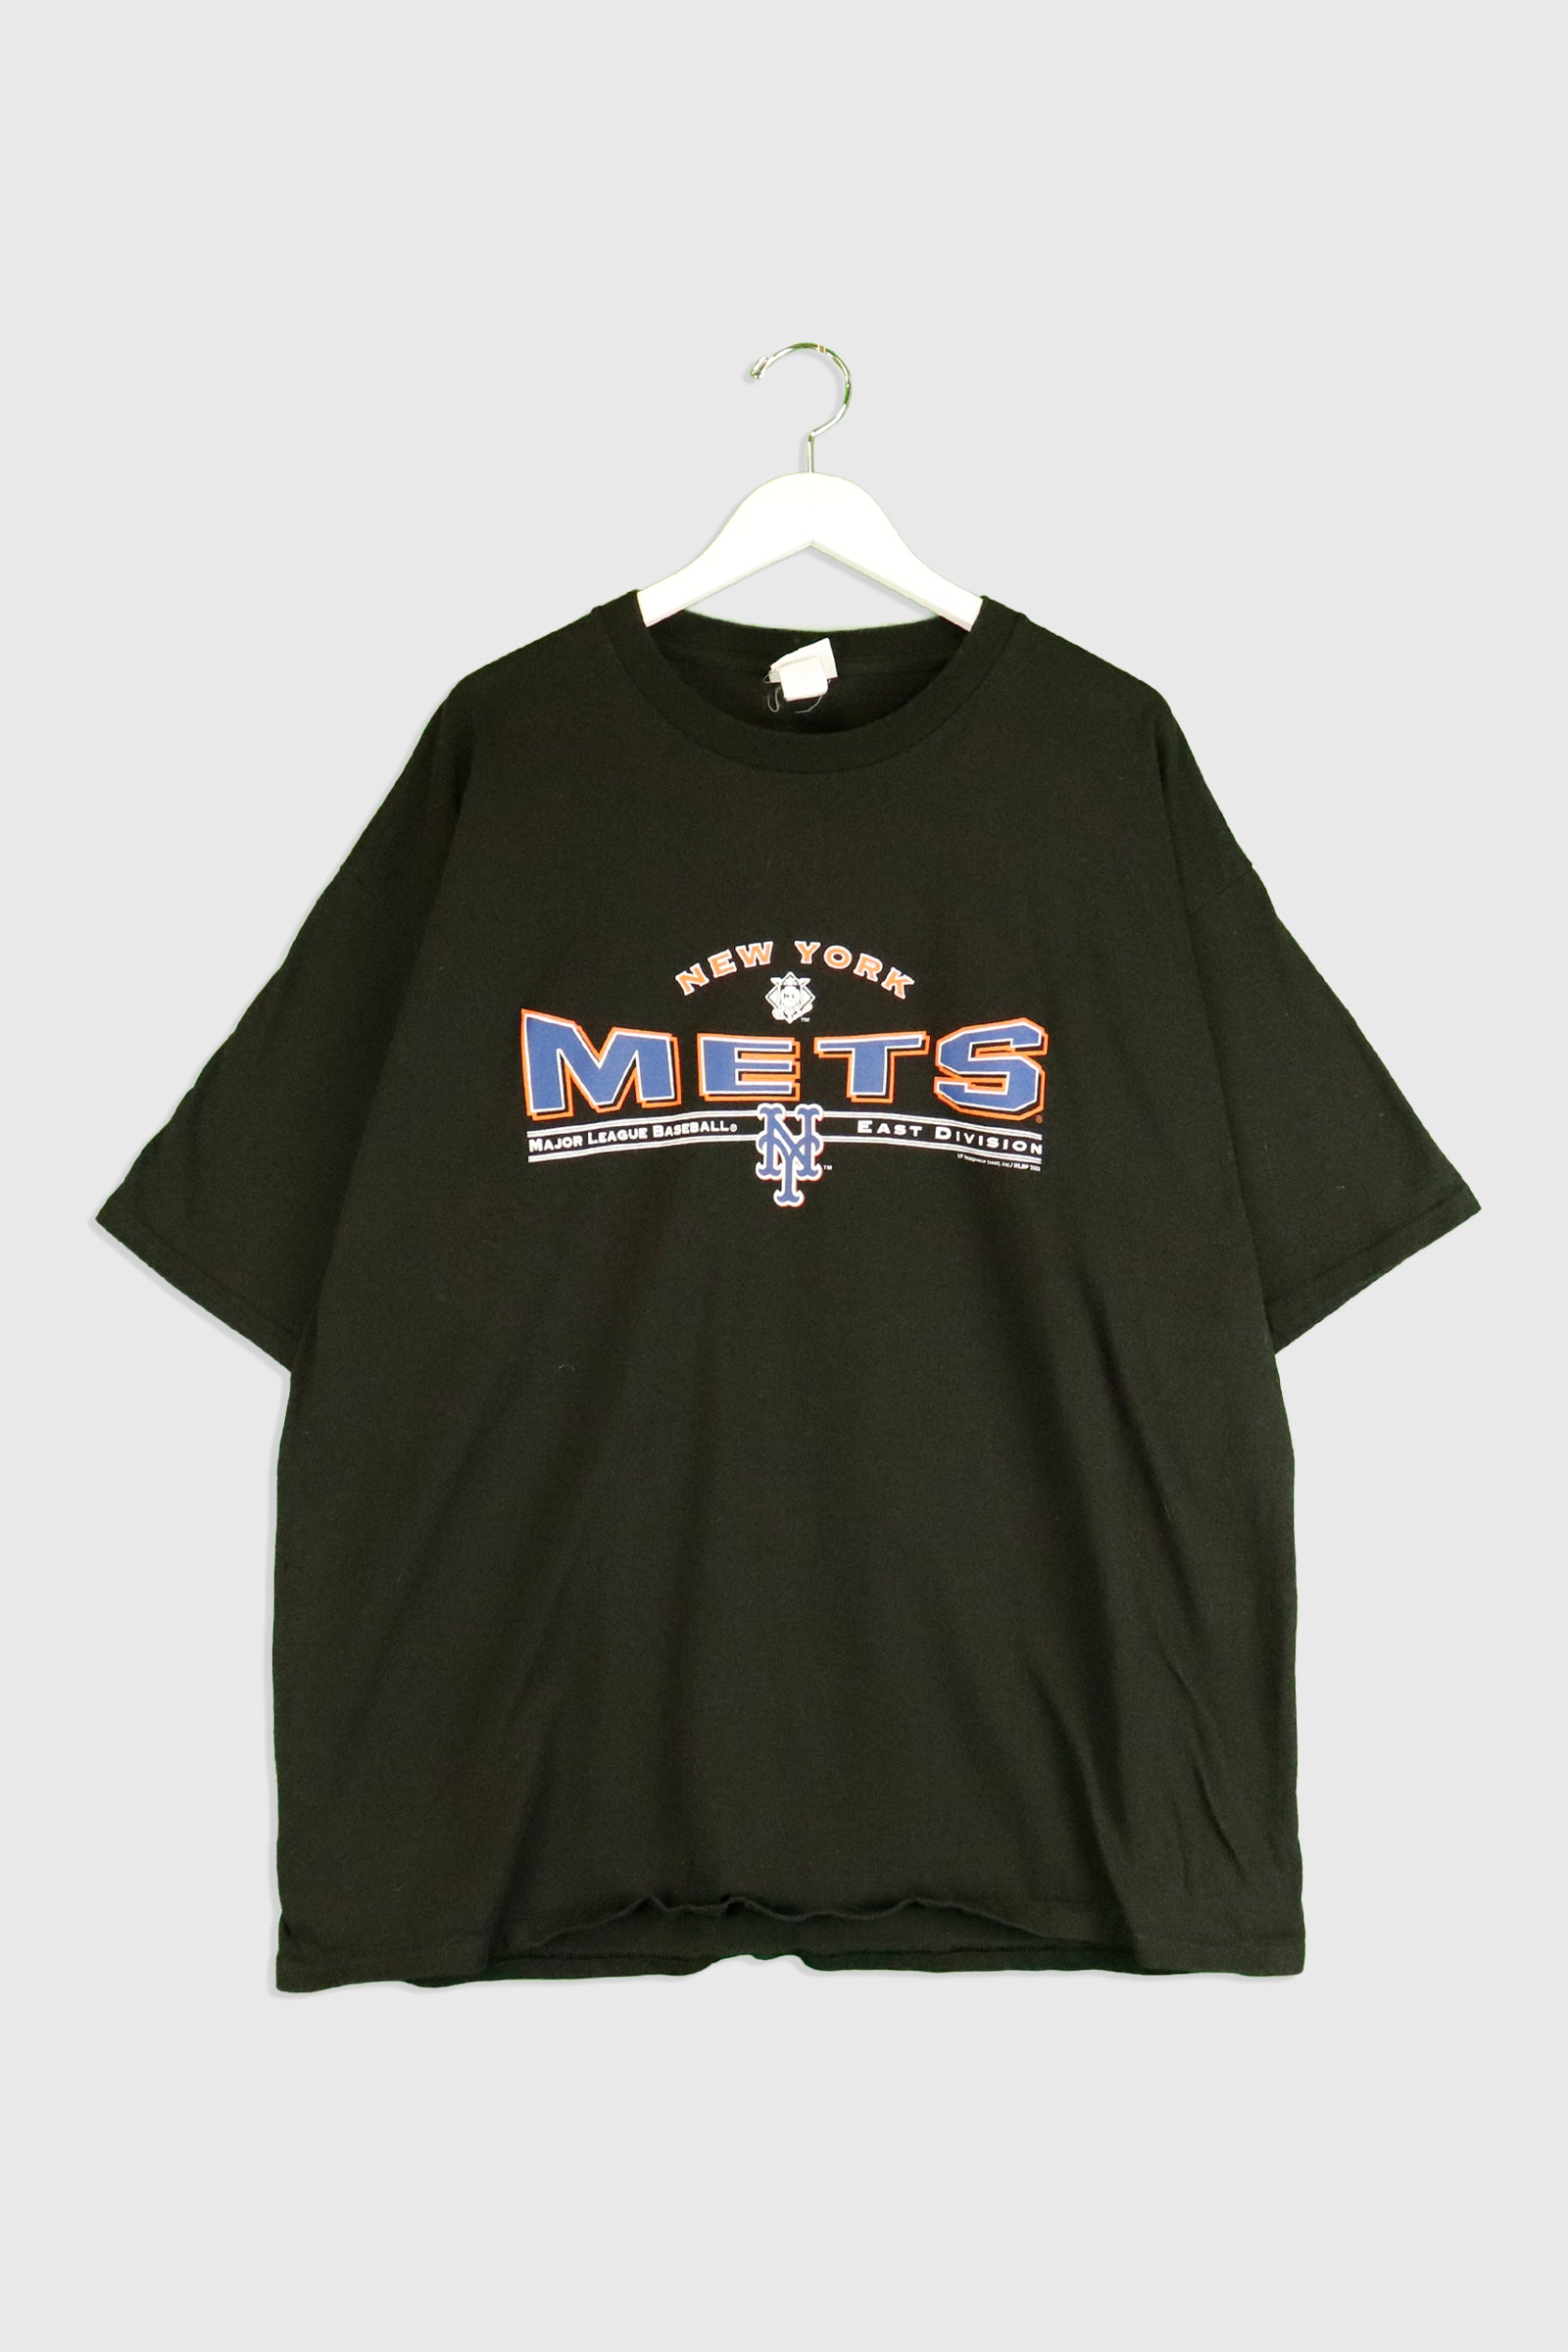 Vintage New York Mets T-Shirt 